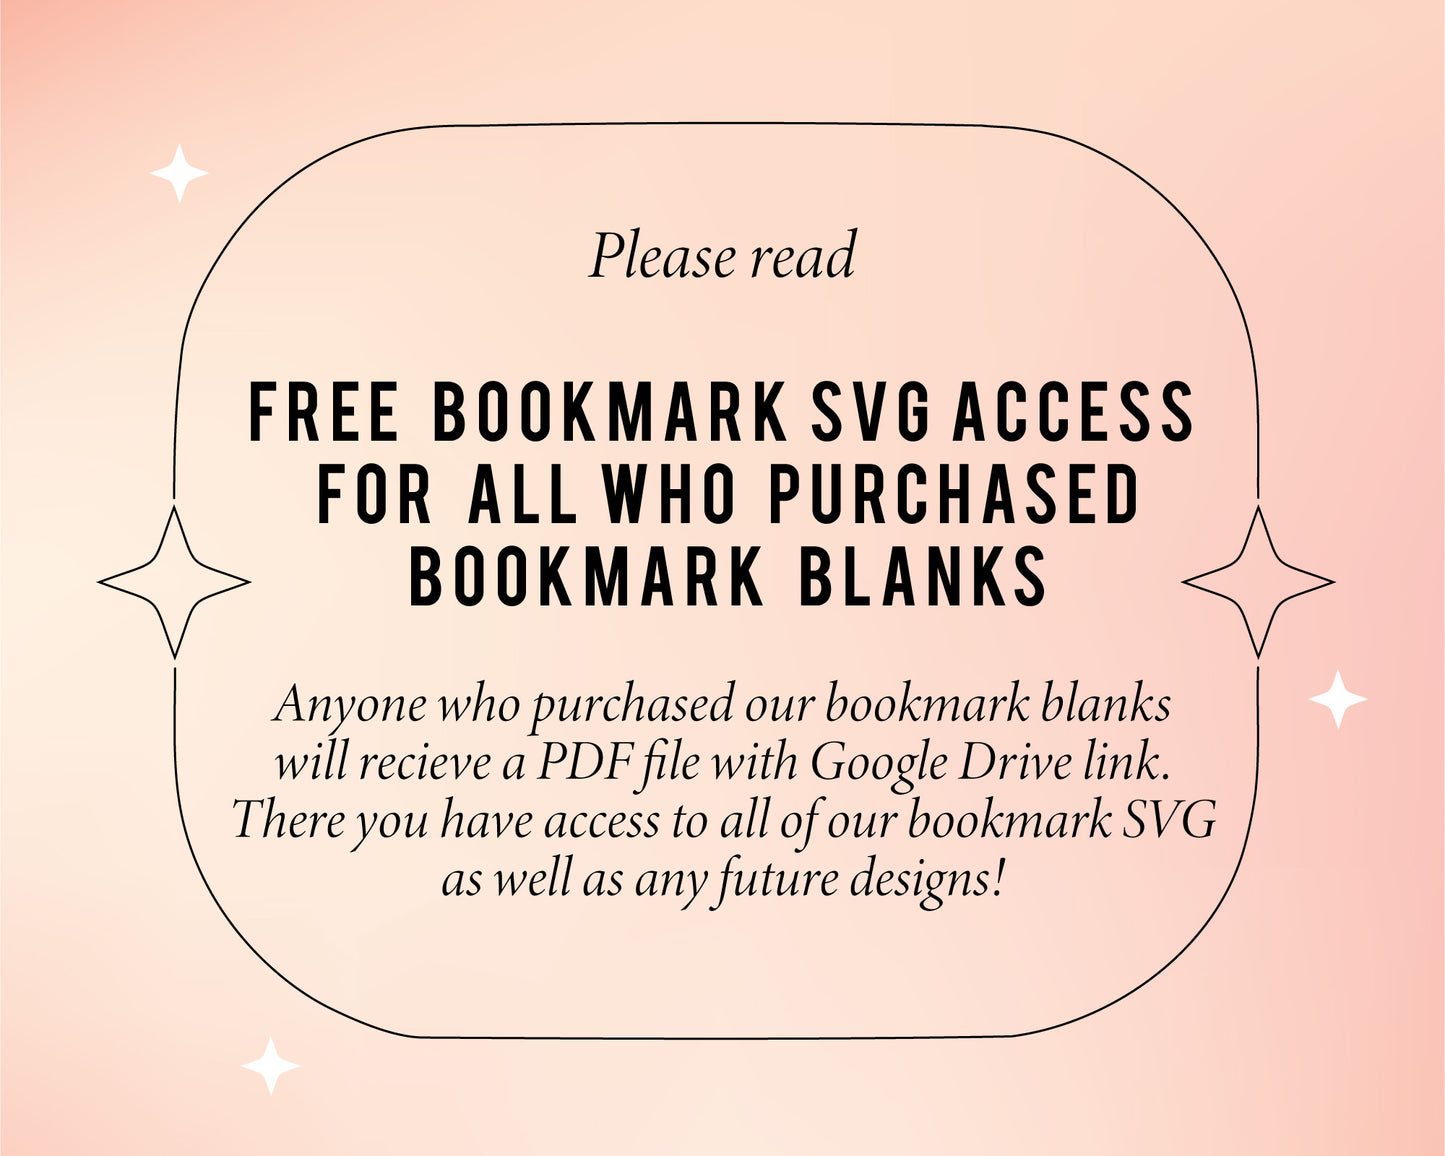 Bookmark Template SVG | Cute Strawberry SVG